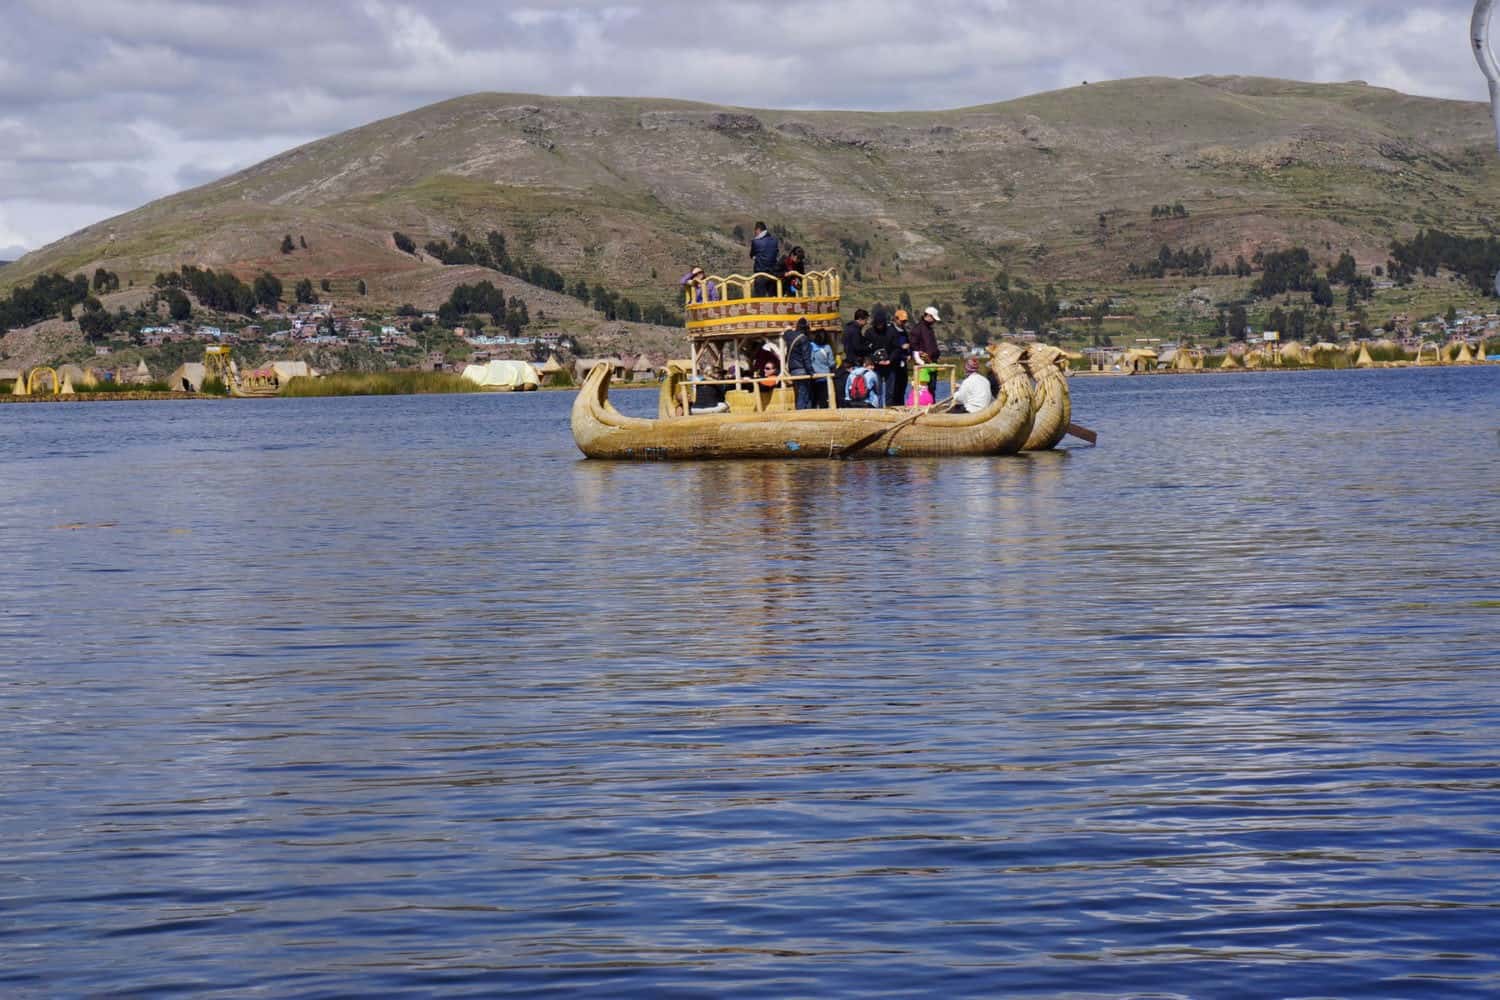 Lake Titicaca reed boat